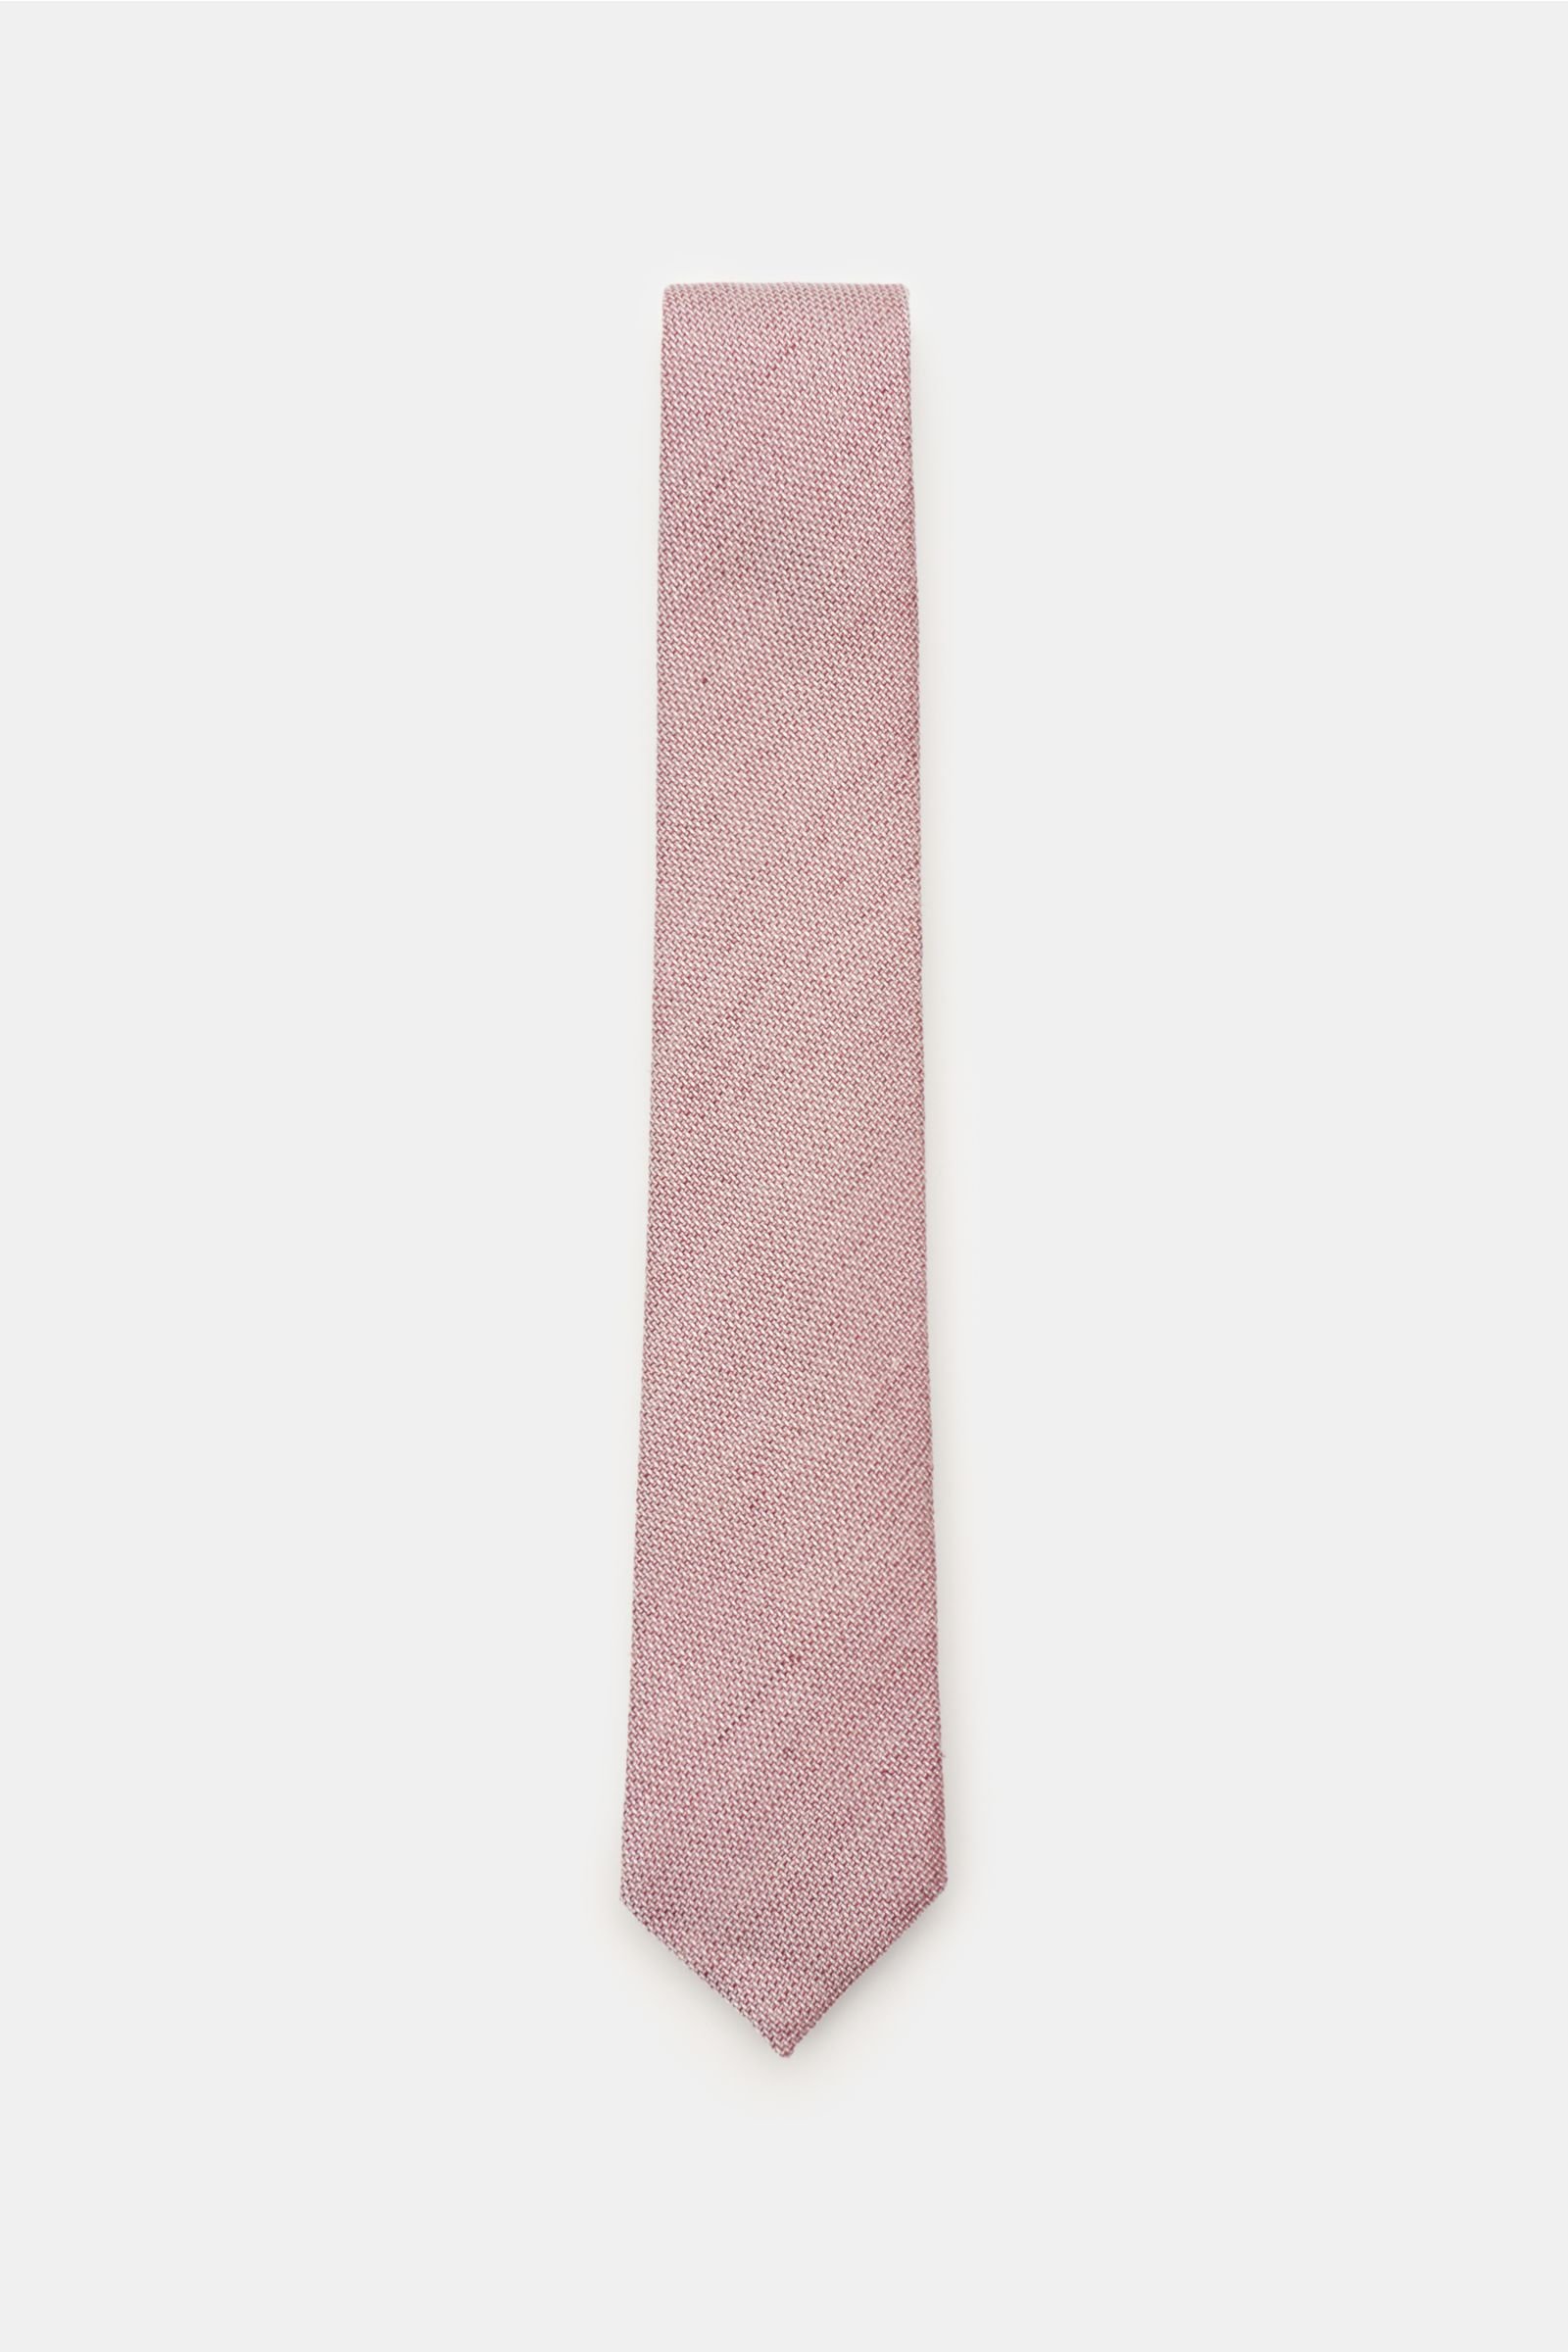 Tie antique pink